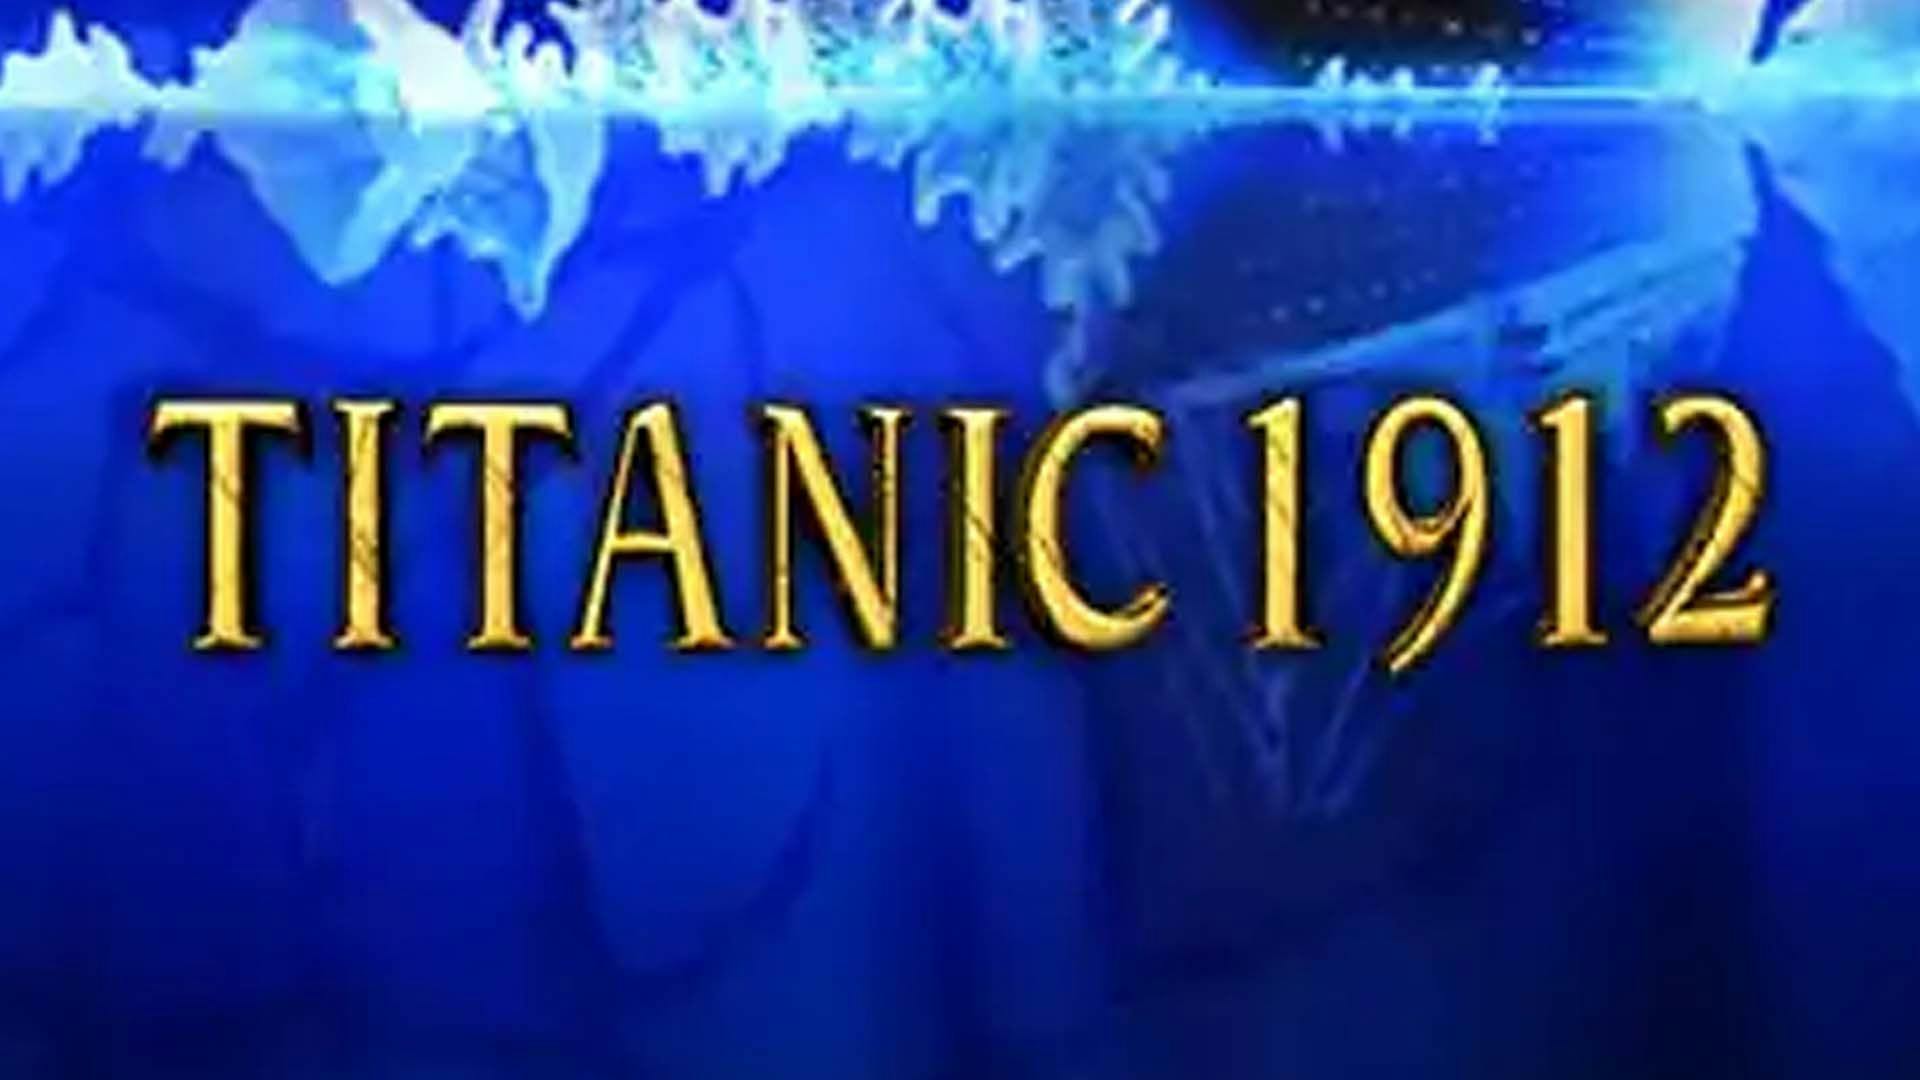 Titanic 1912 Free Slot Online Demo